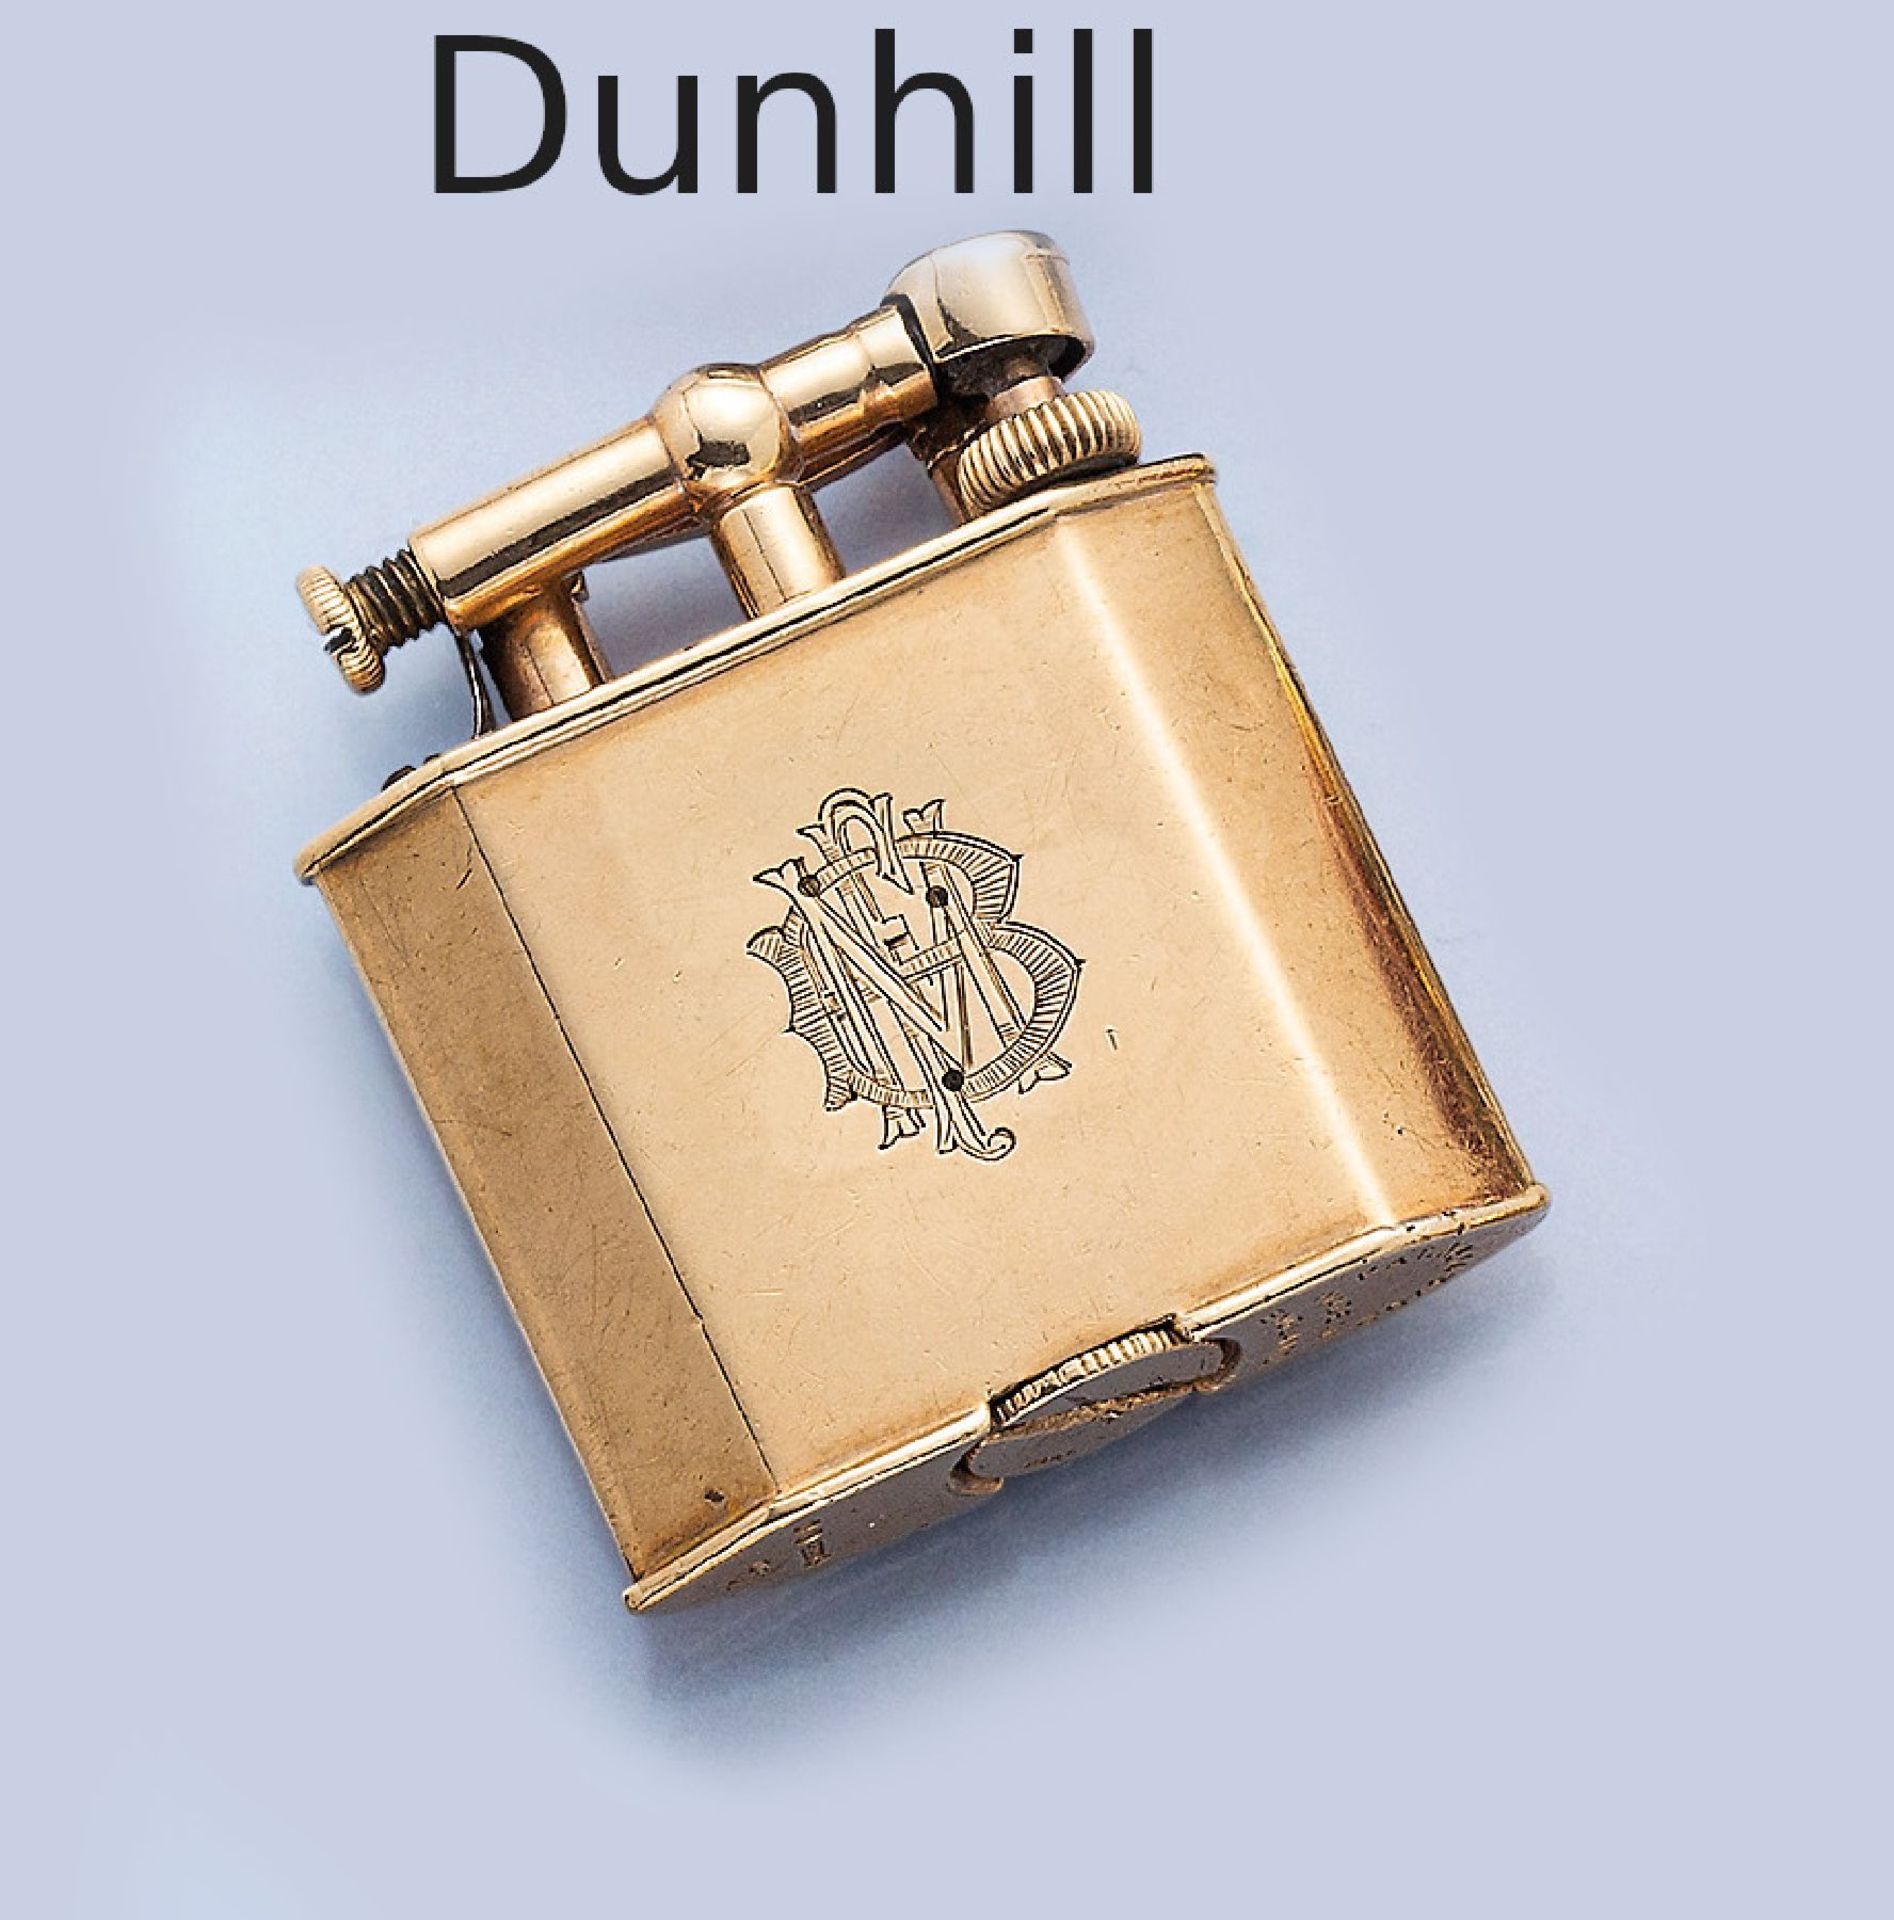 Dunhill-Feuerzeug, England 1930er Jahre,   GG